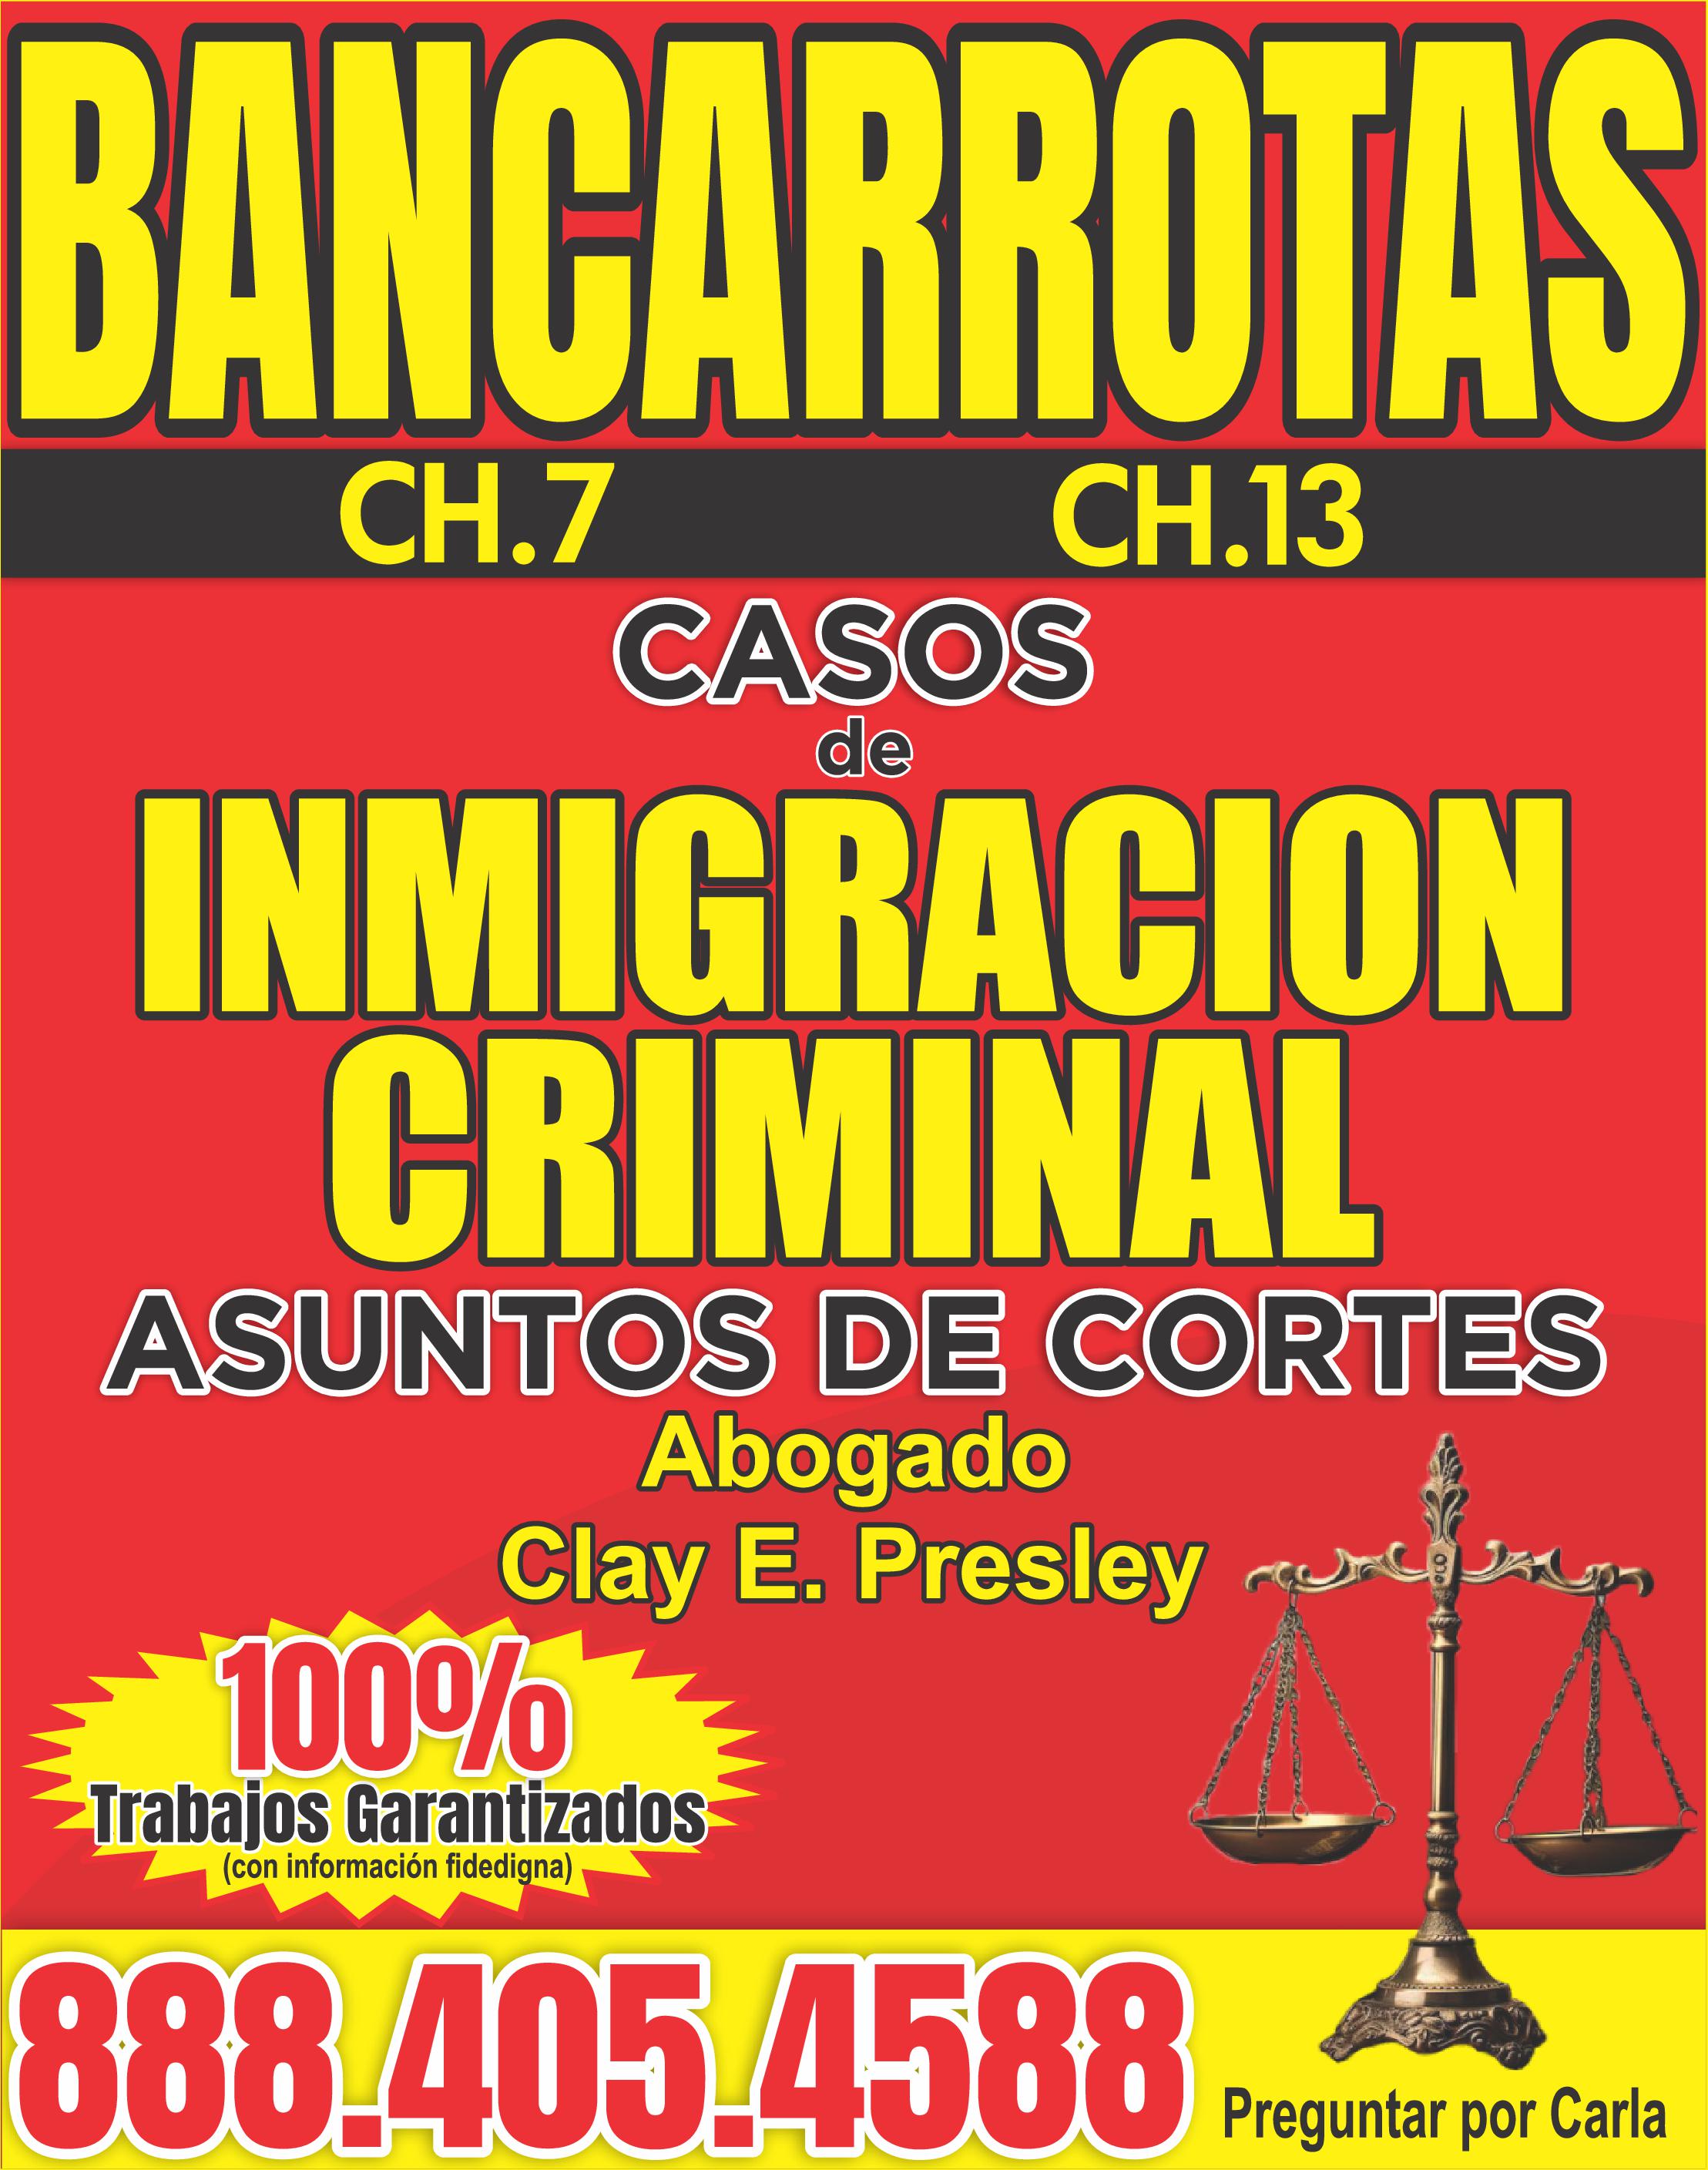 BANCARROTAS CH.7 CASOS de CH.13 INMIGRACION CRIMINAL ASUNTOS DE CORTES 100 Abogado Clay E. Presley Trabajos Garantizados con información fidedigna 888.405.4588 Pregunta por Carla